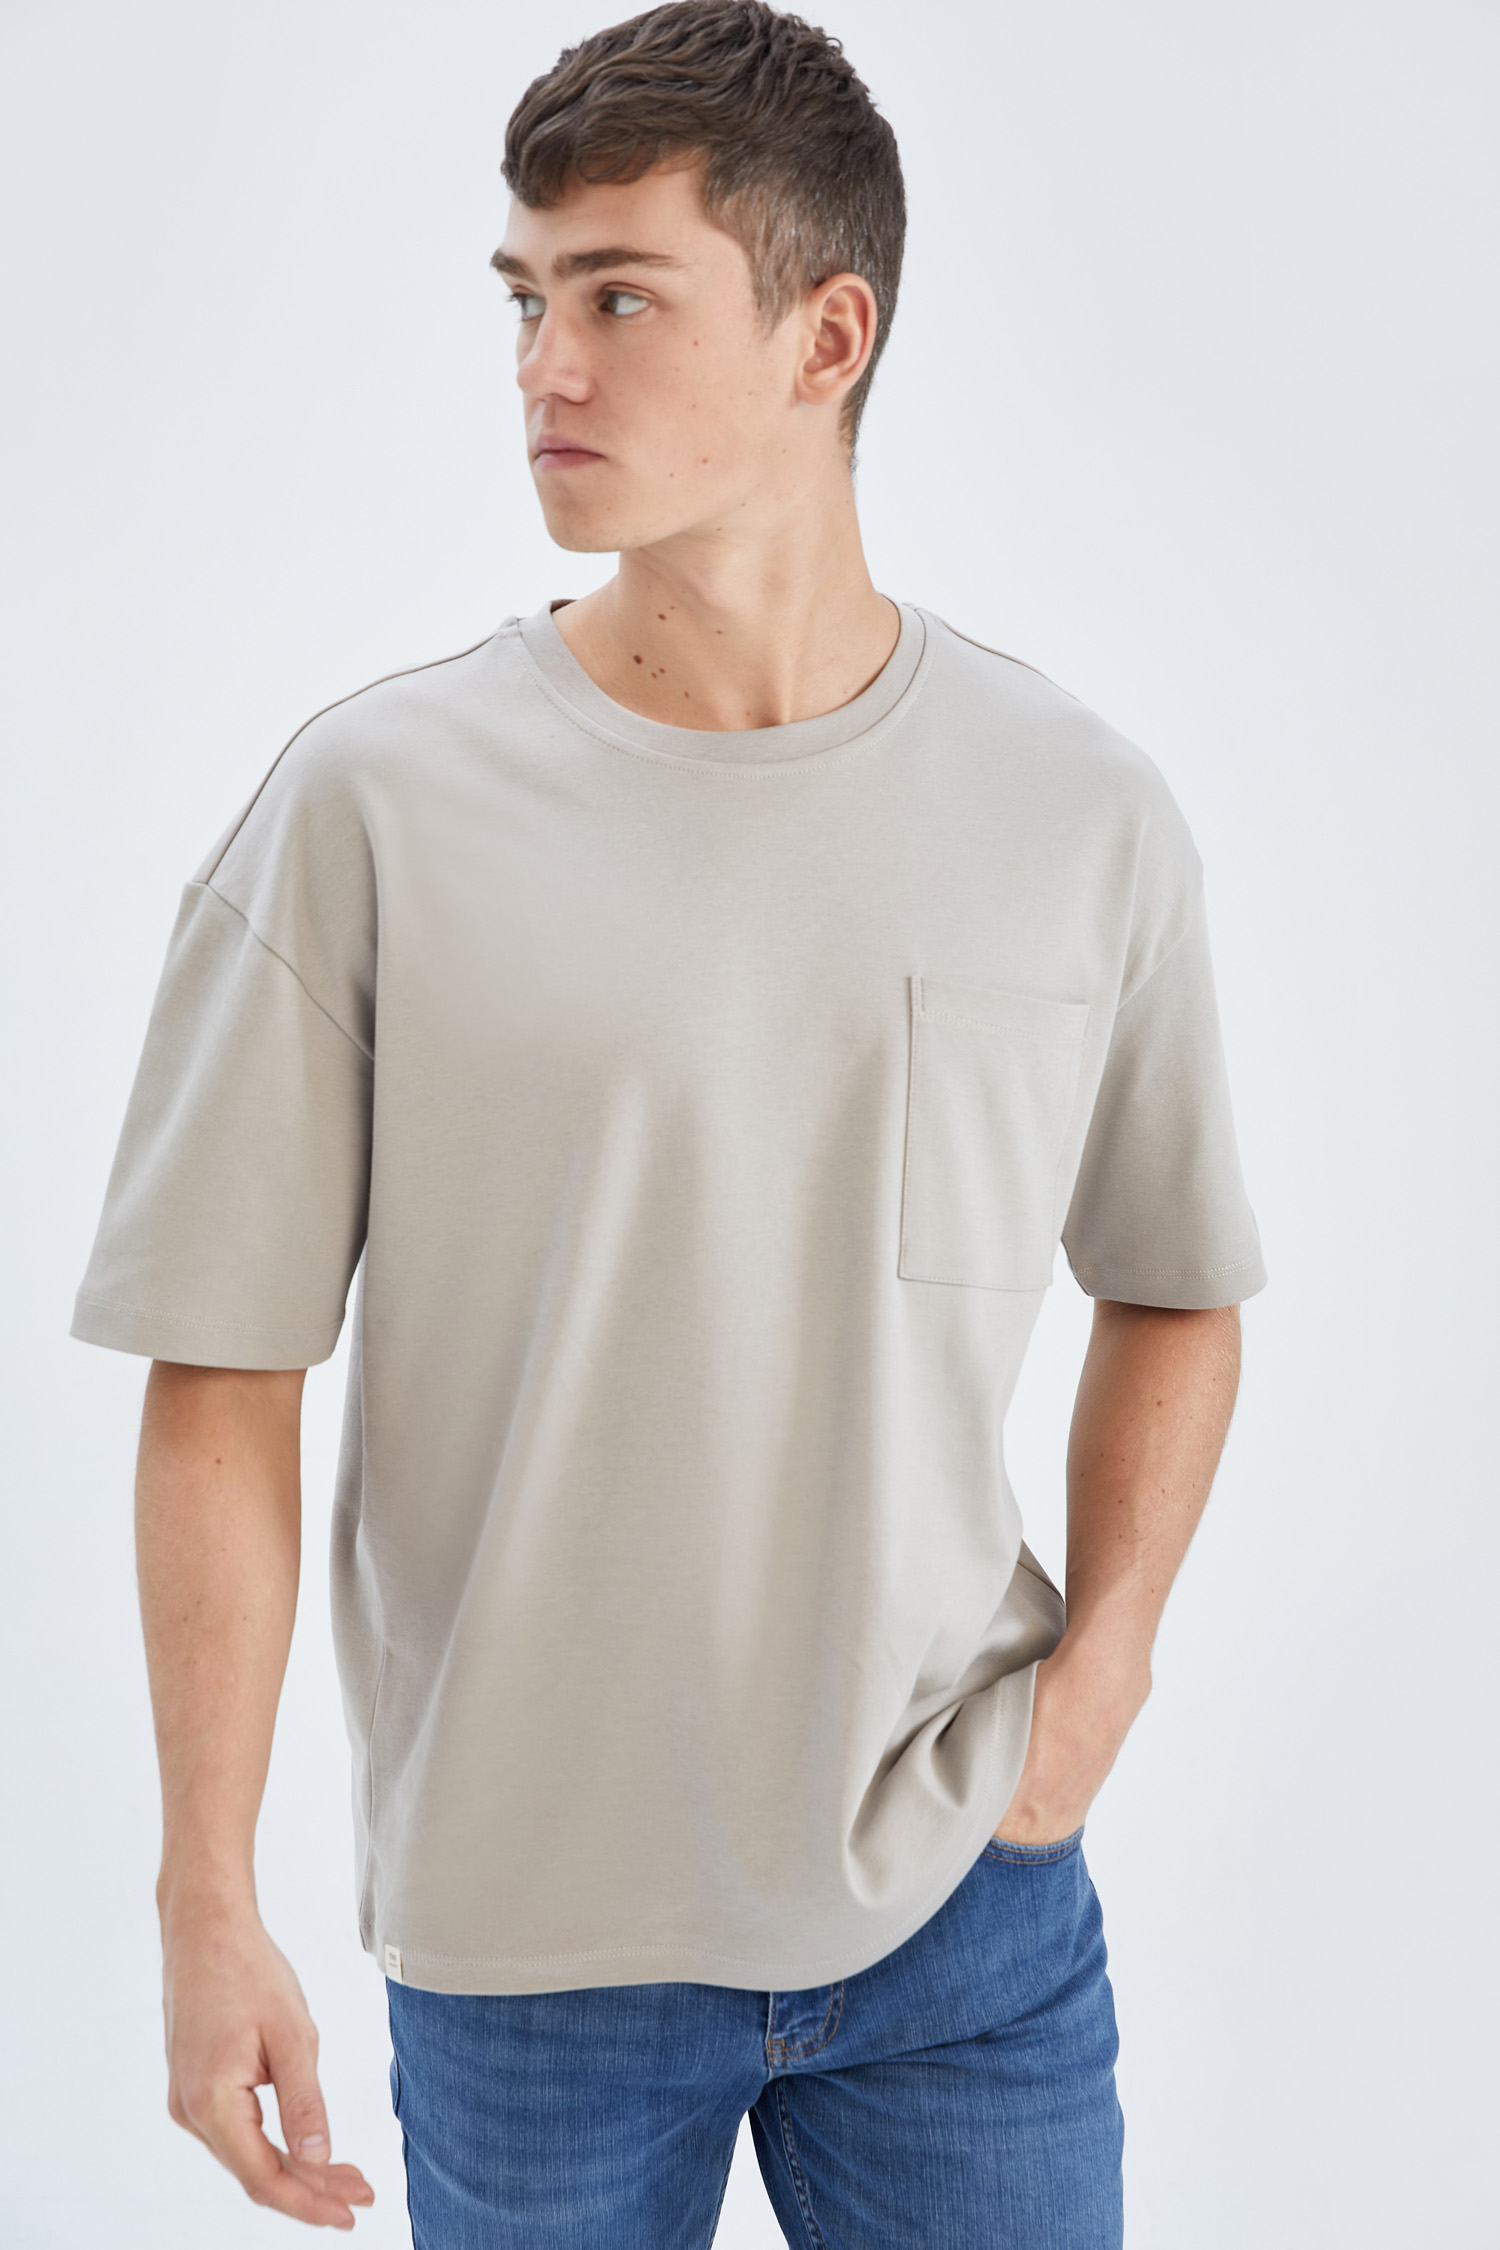 DeFacto Oversize Fit Crew Neck Short Sleeve Cotton T-Shirt T恤